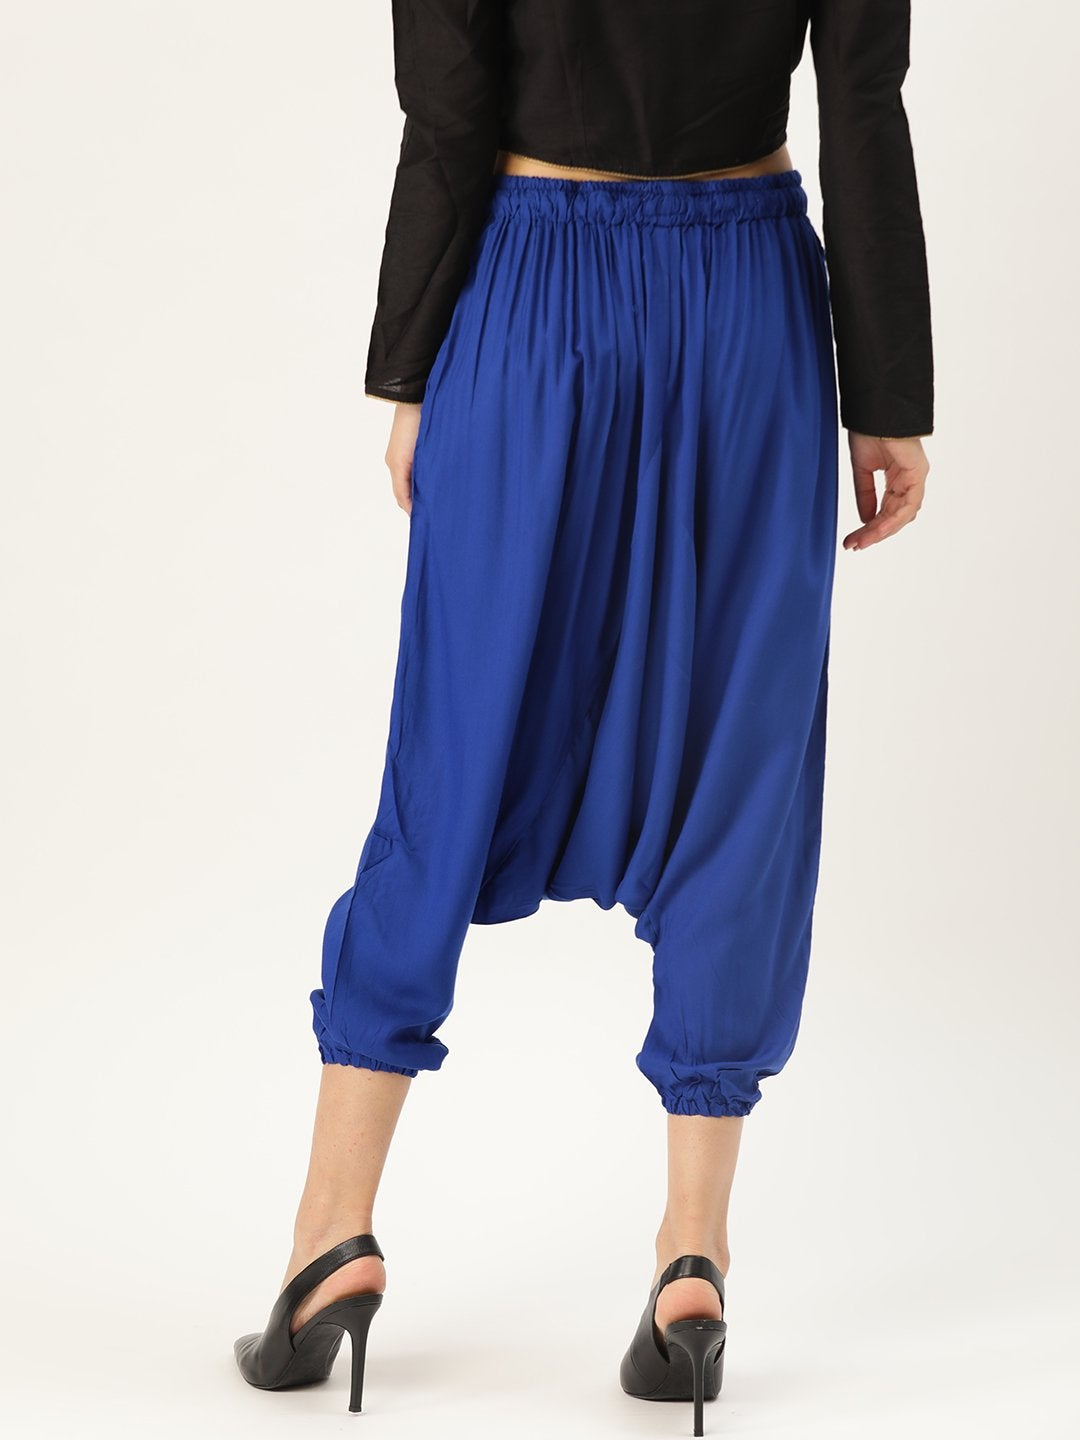 Women's Harem Pants - Indigo Blue - InWeave